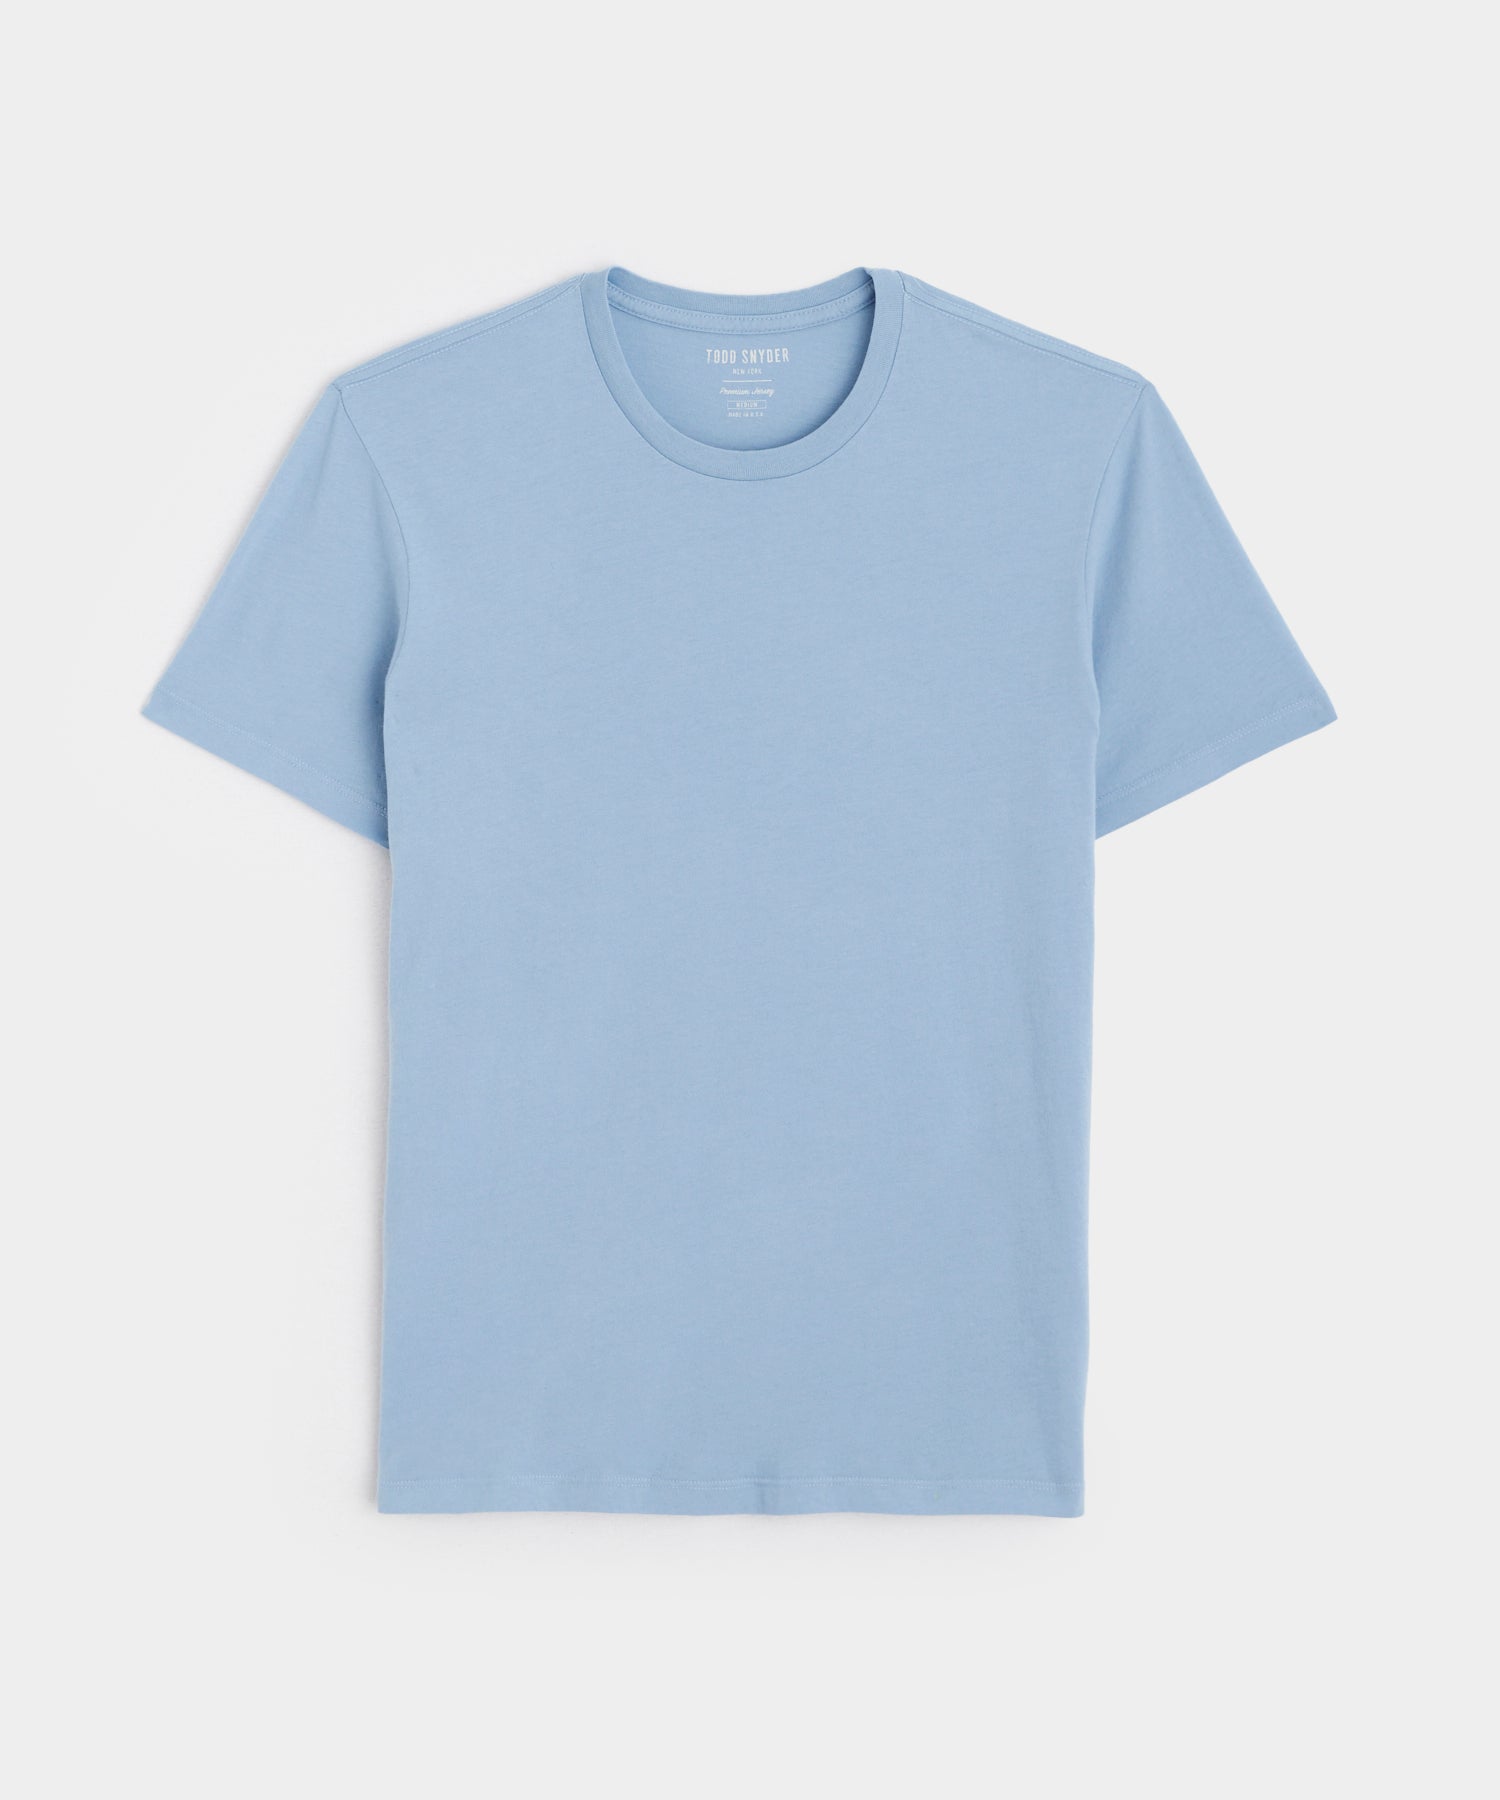 Made In L.A. Premium Jersey T-Shirt in Blue Haze